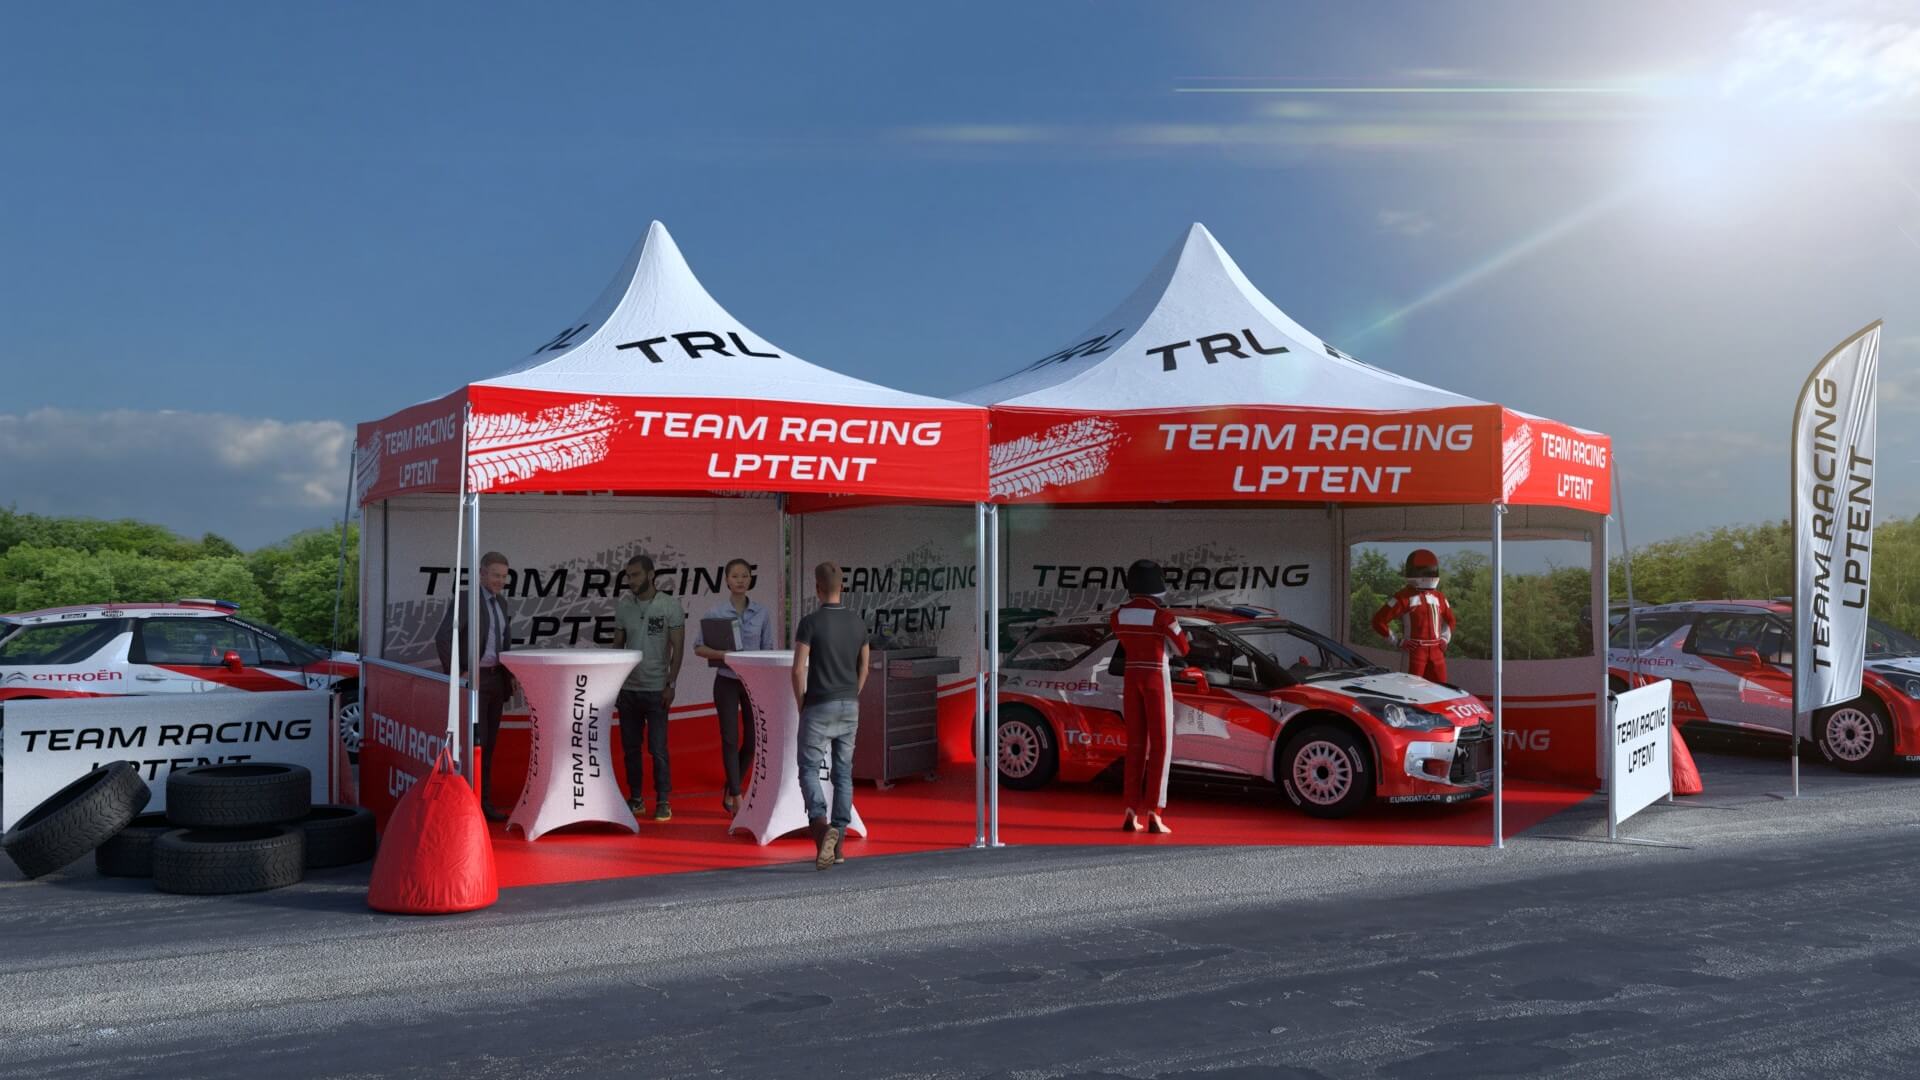 Tente paddock rallye - Un stand performant pour vos compétitions